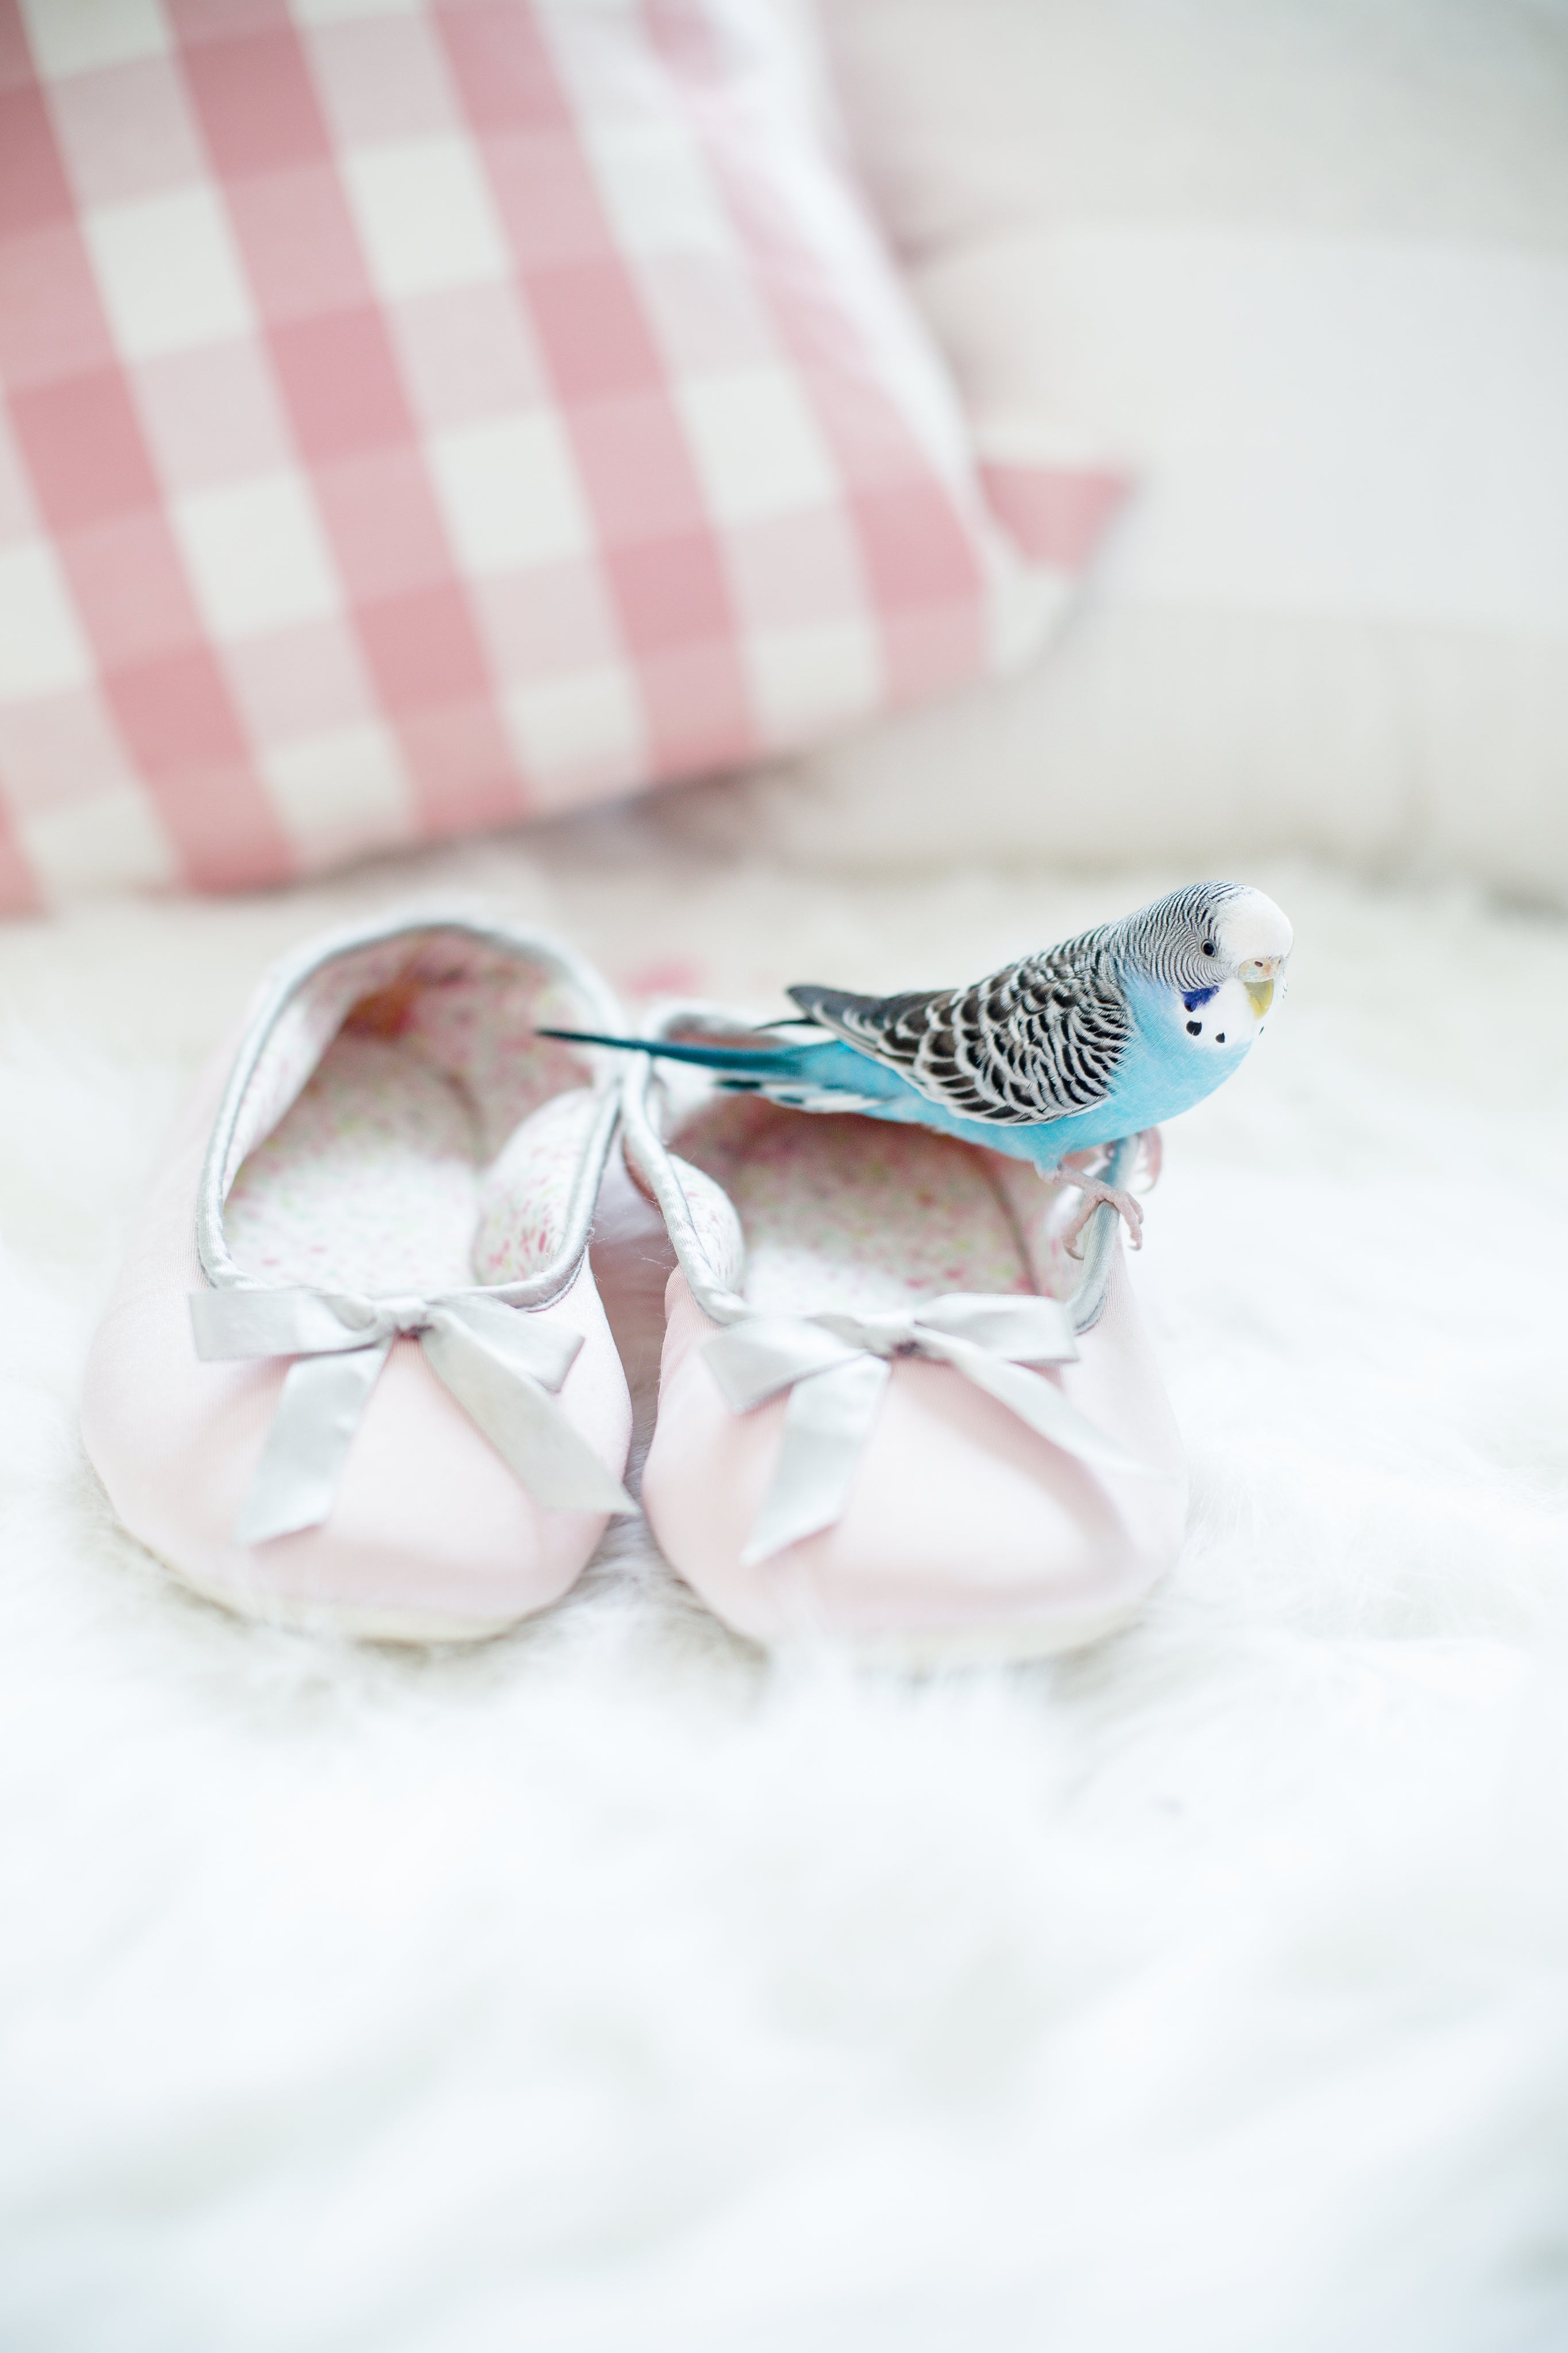 files/a-parakeet-sitting-on-shoes.jpg